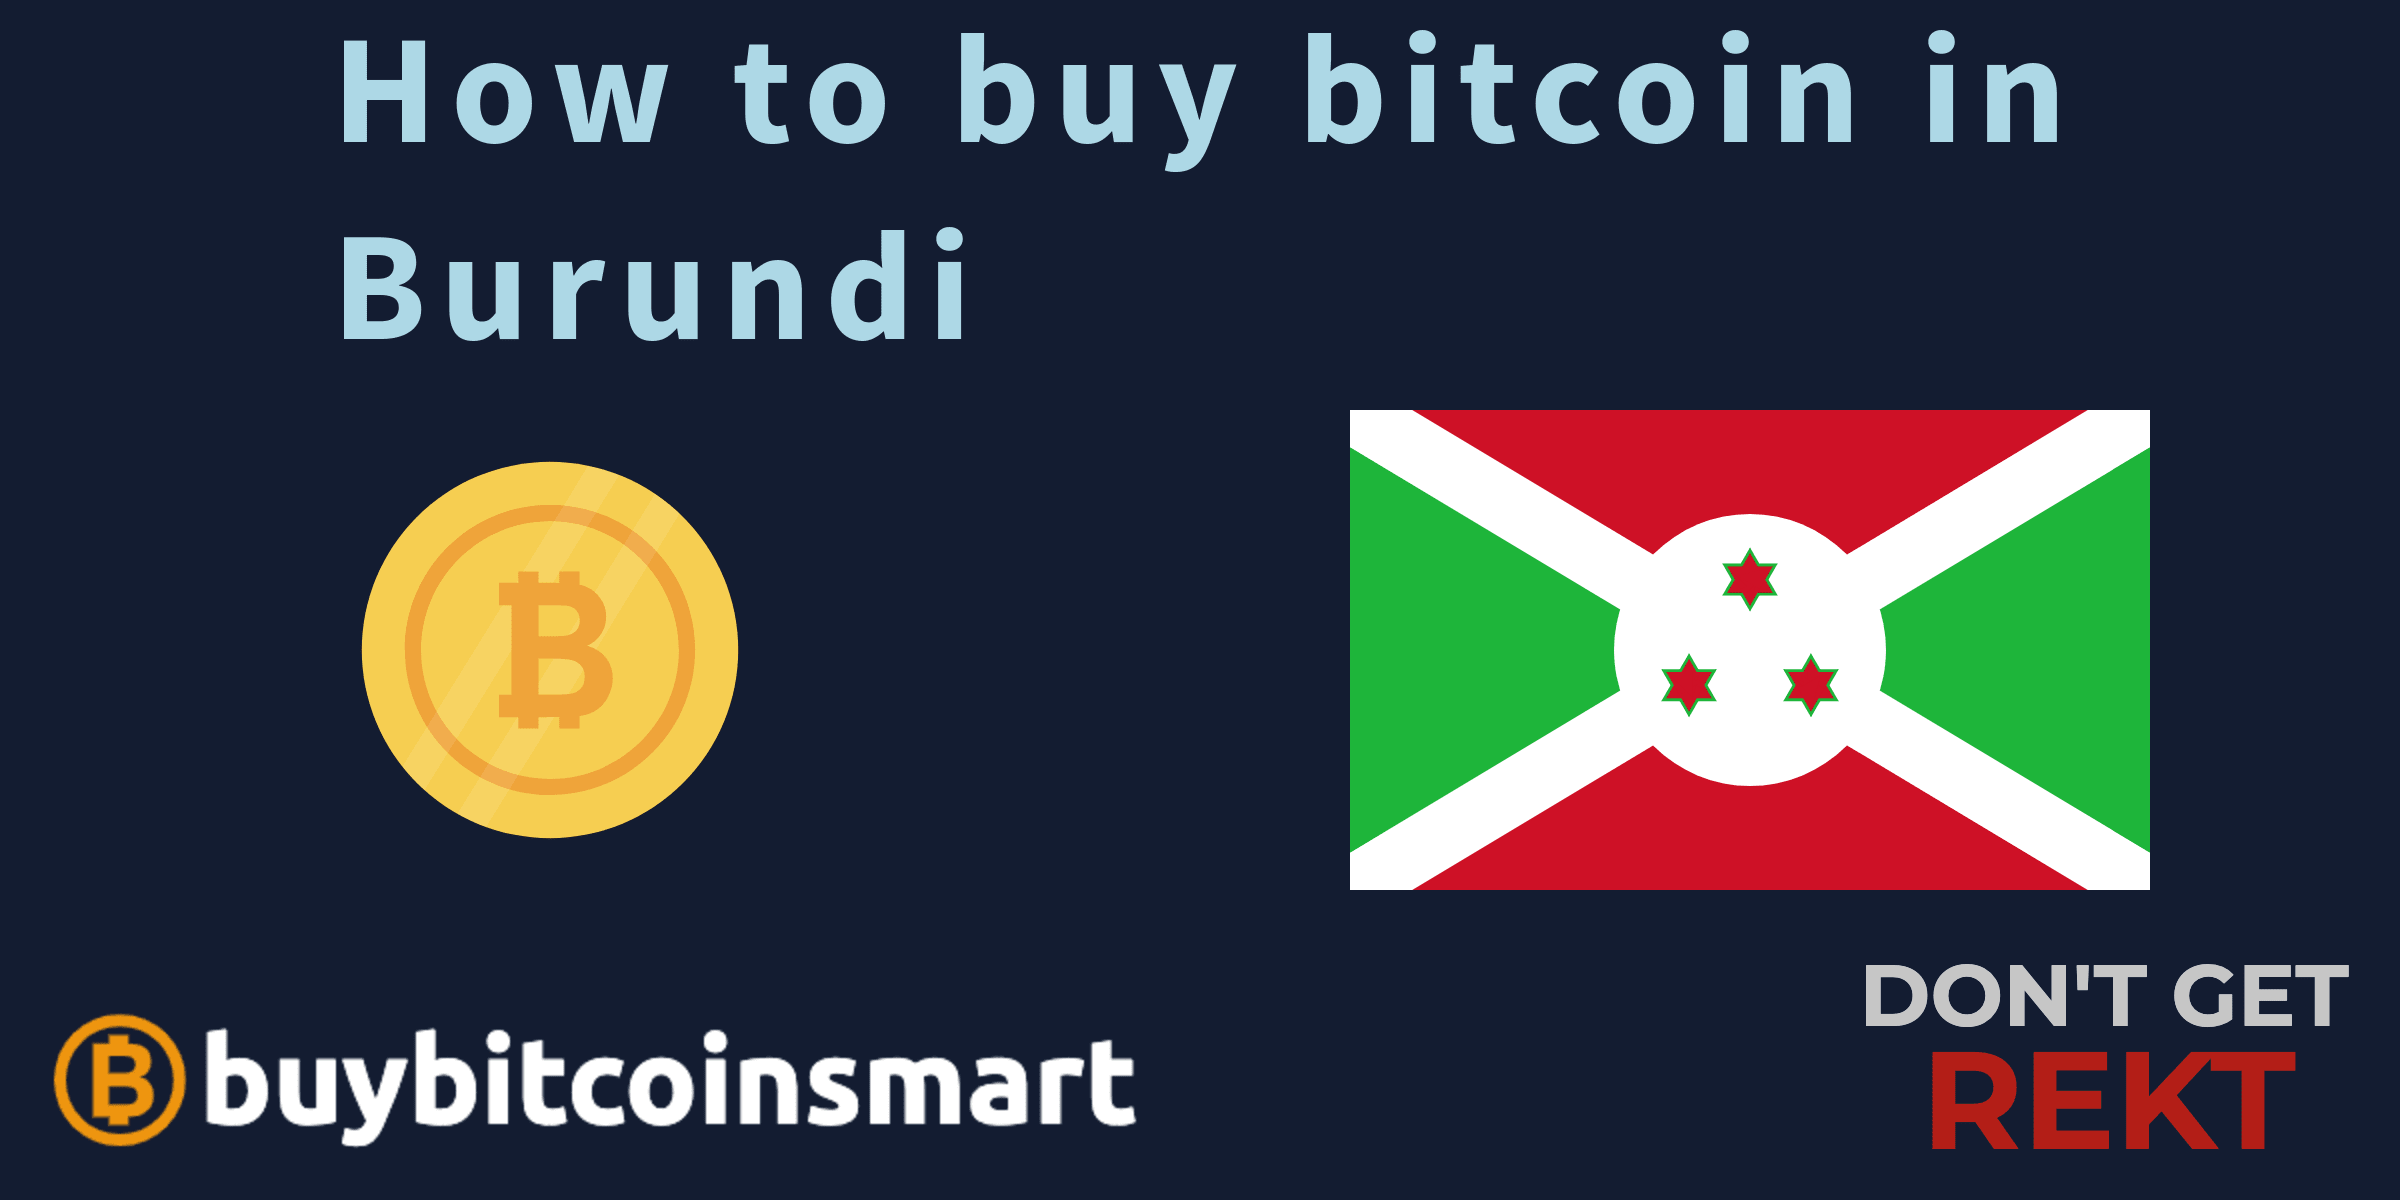 Buy bitcoin in burundi in an easy and secure way | Bitmama